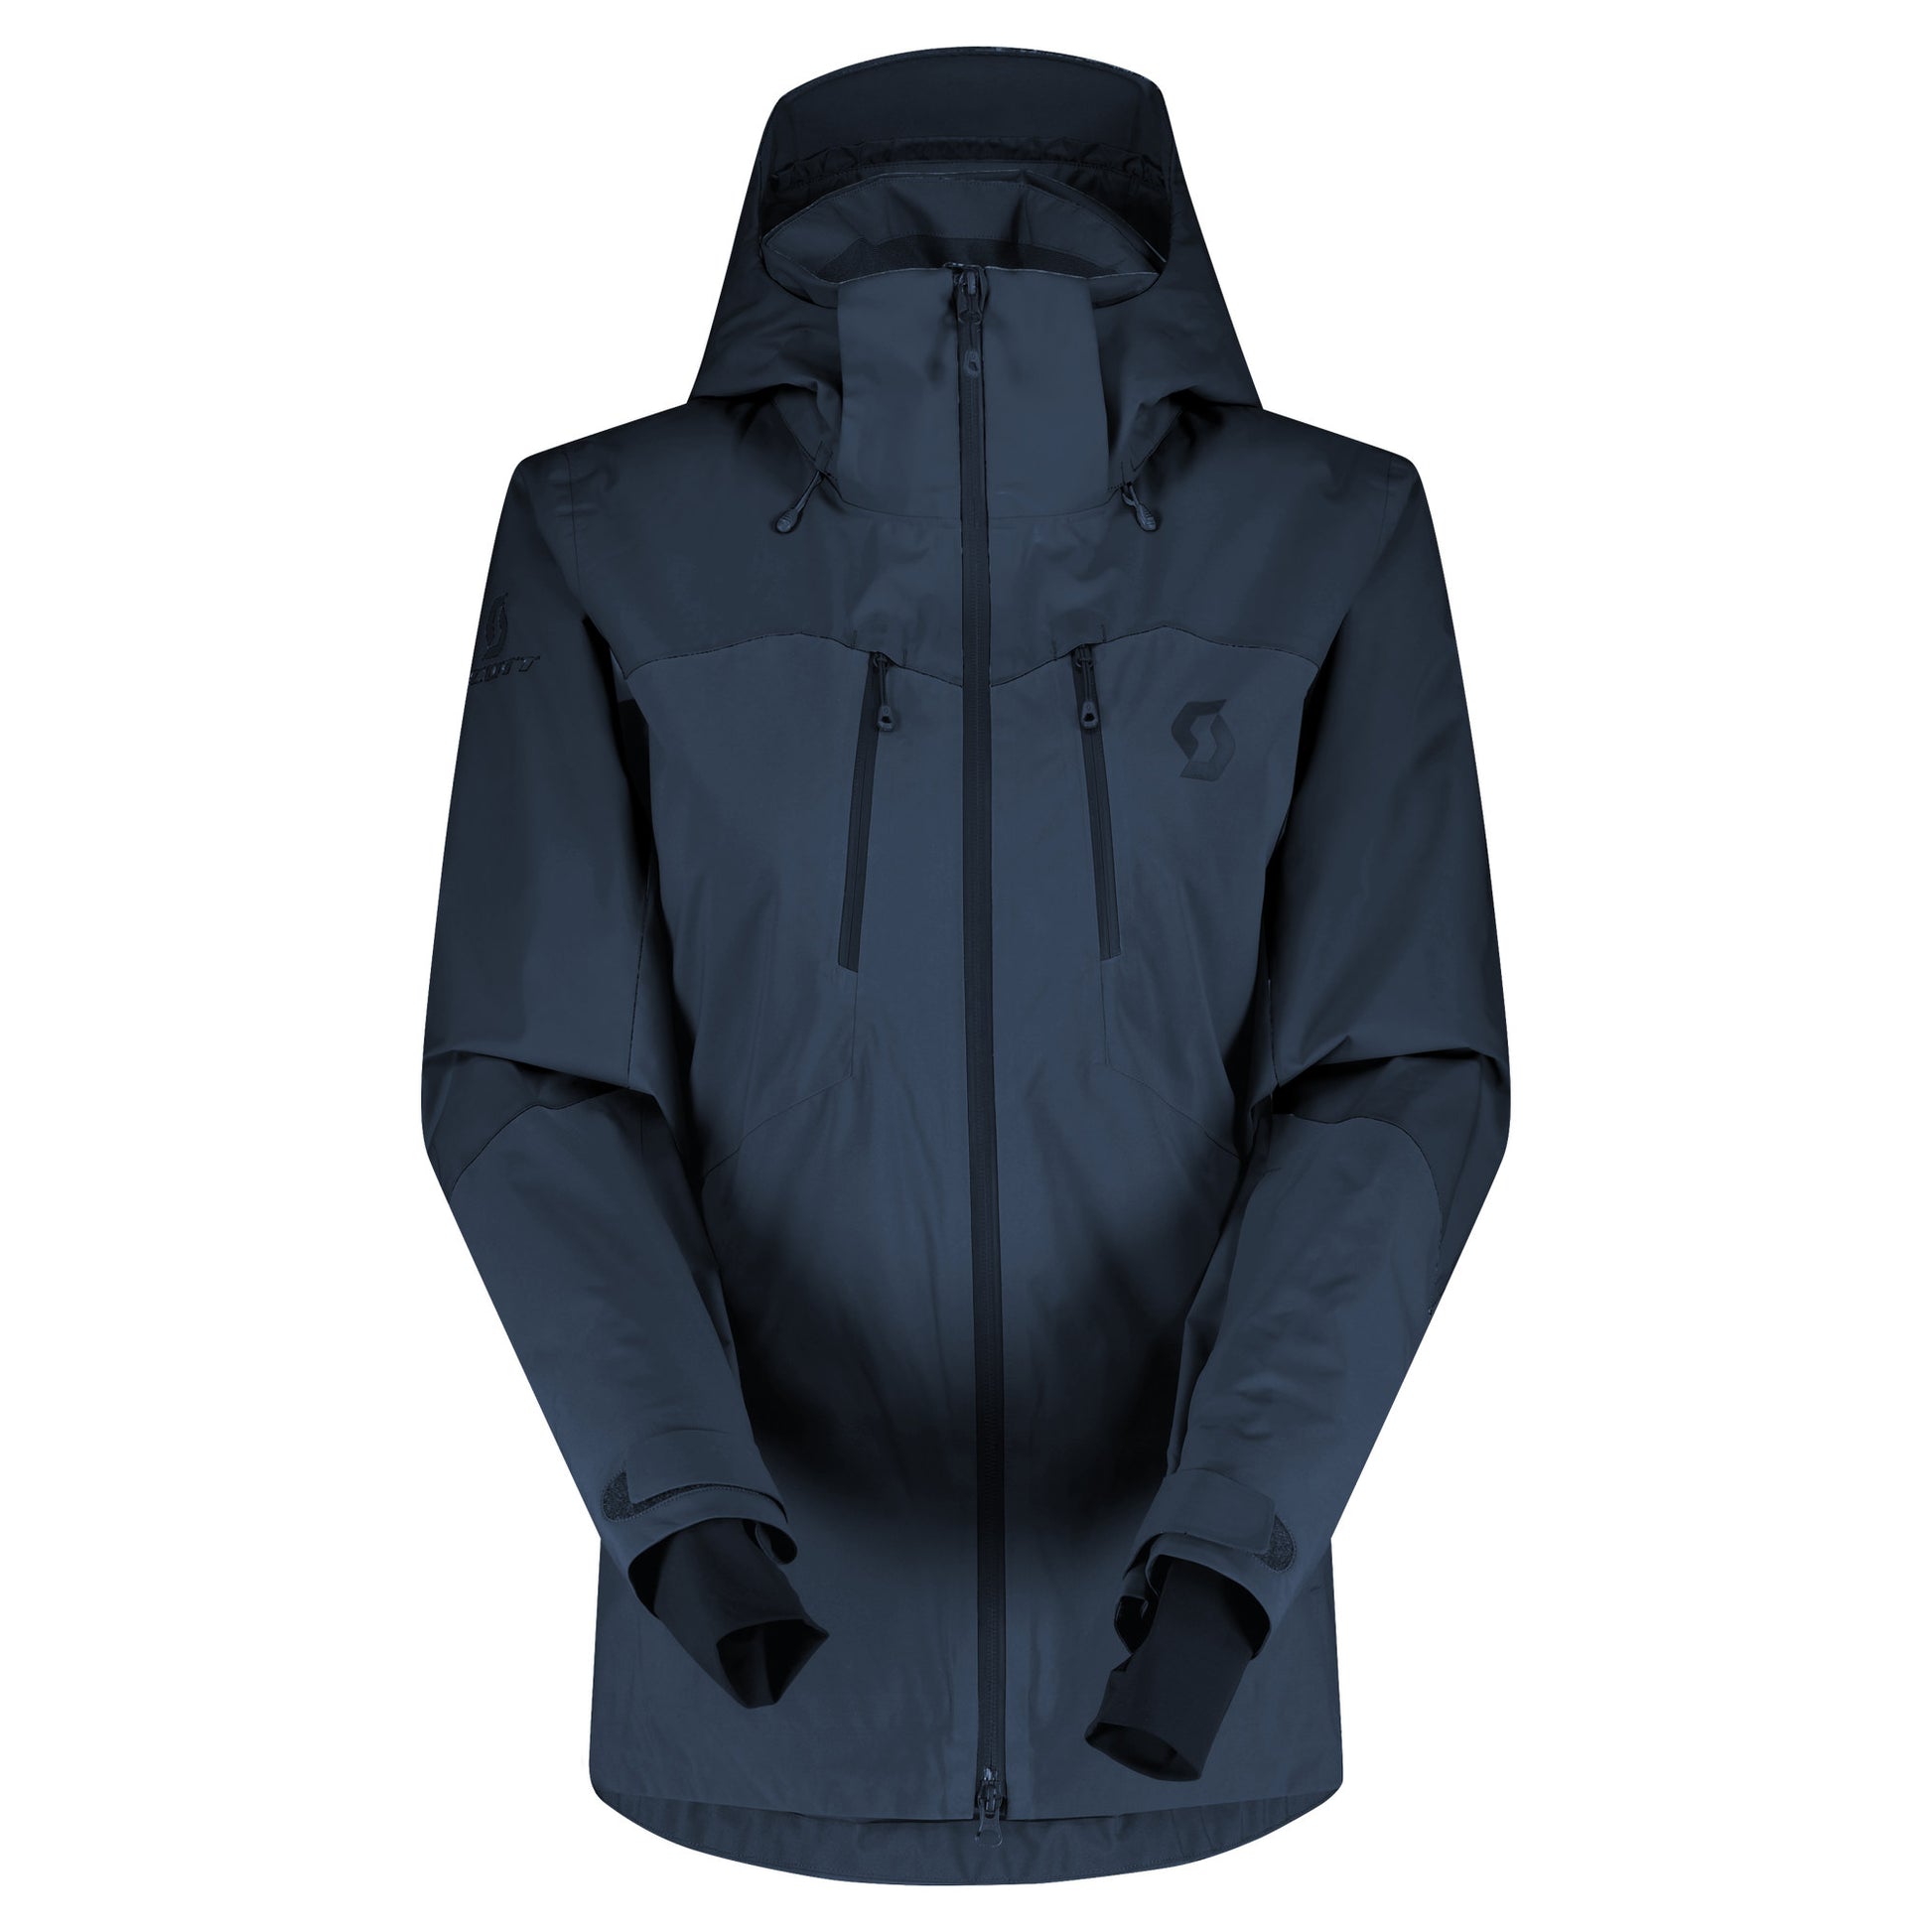 Scott Ultimate Dryo 10 Jacket - Ski jacket Women's, Free EU Delivery